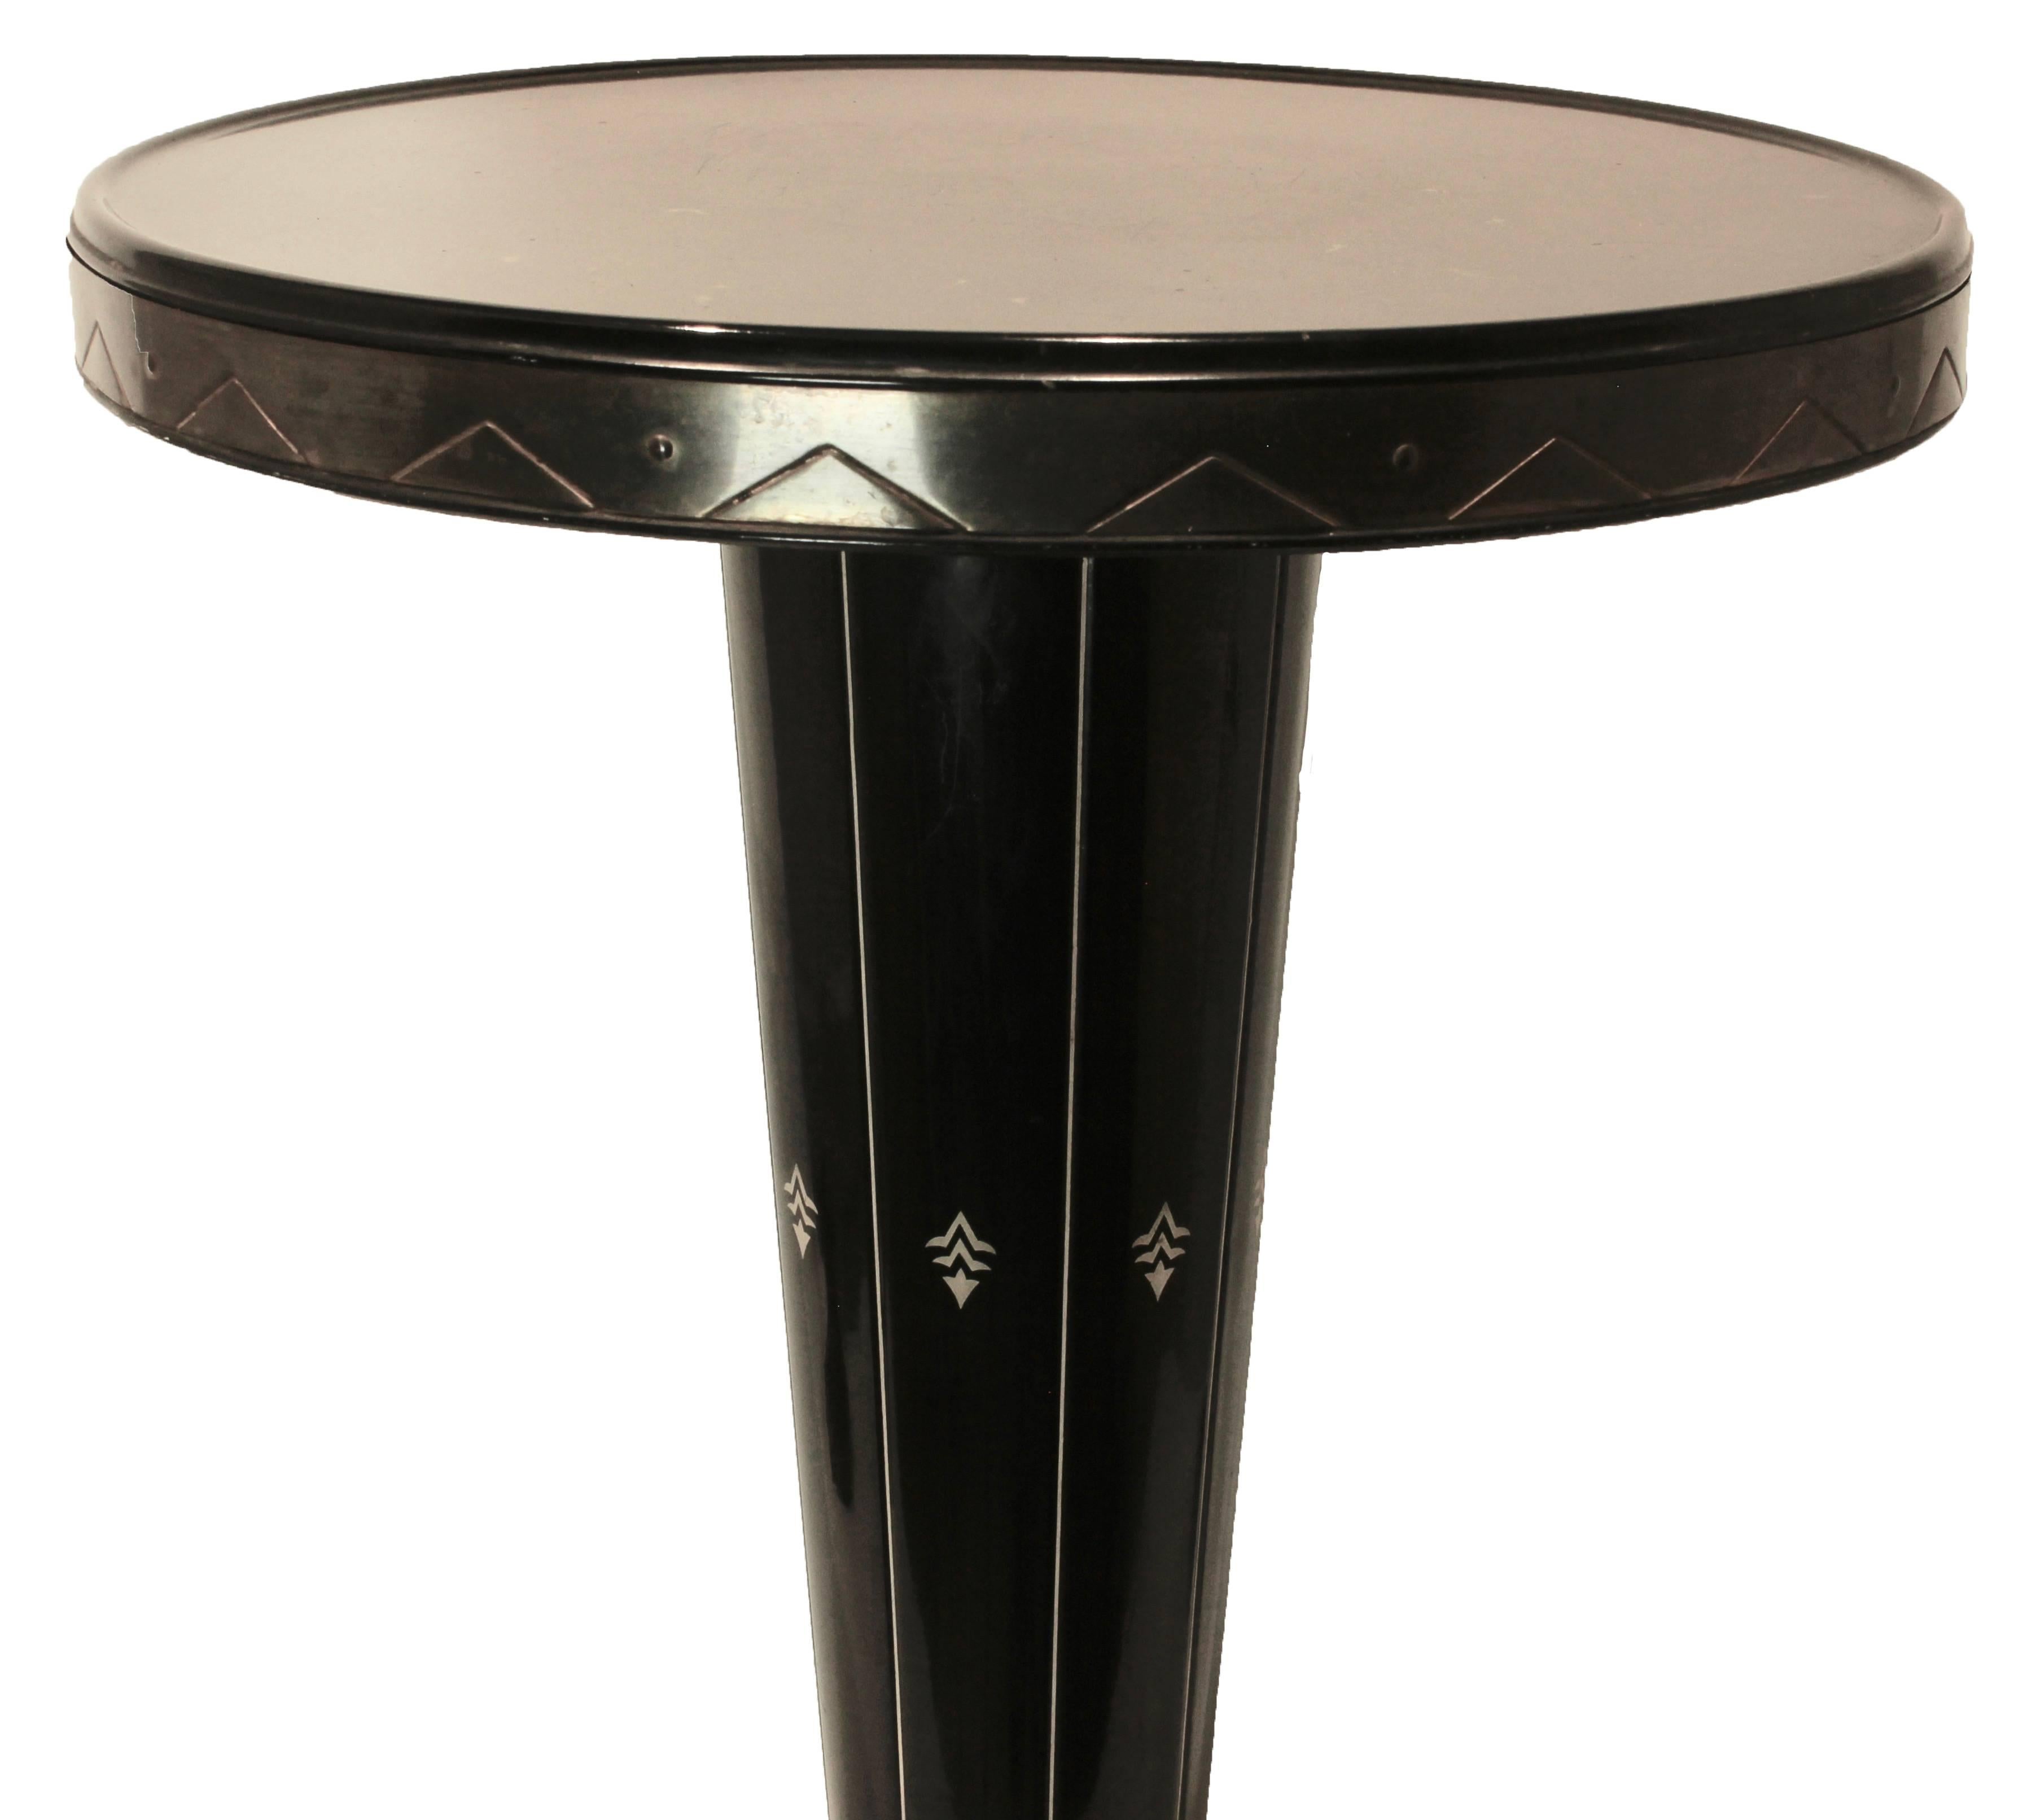 Enameled Cast Iron Metal Enamel Side Table with Stylized Design